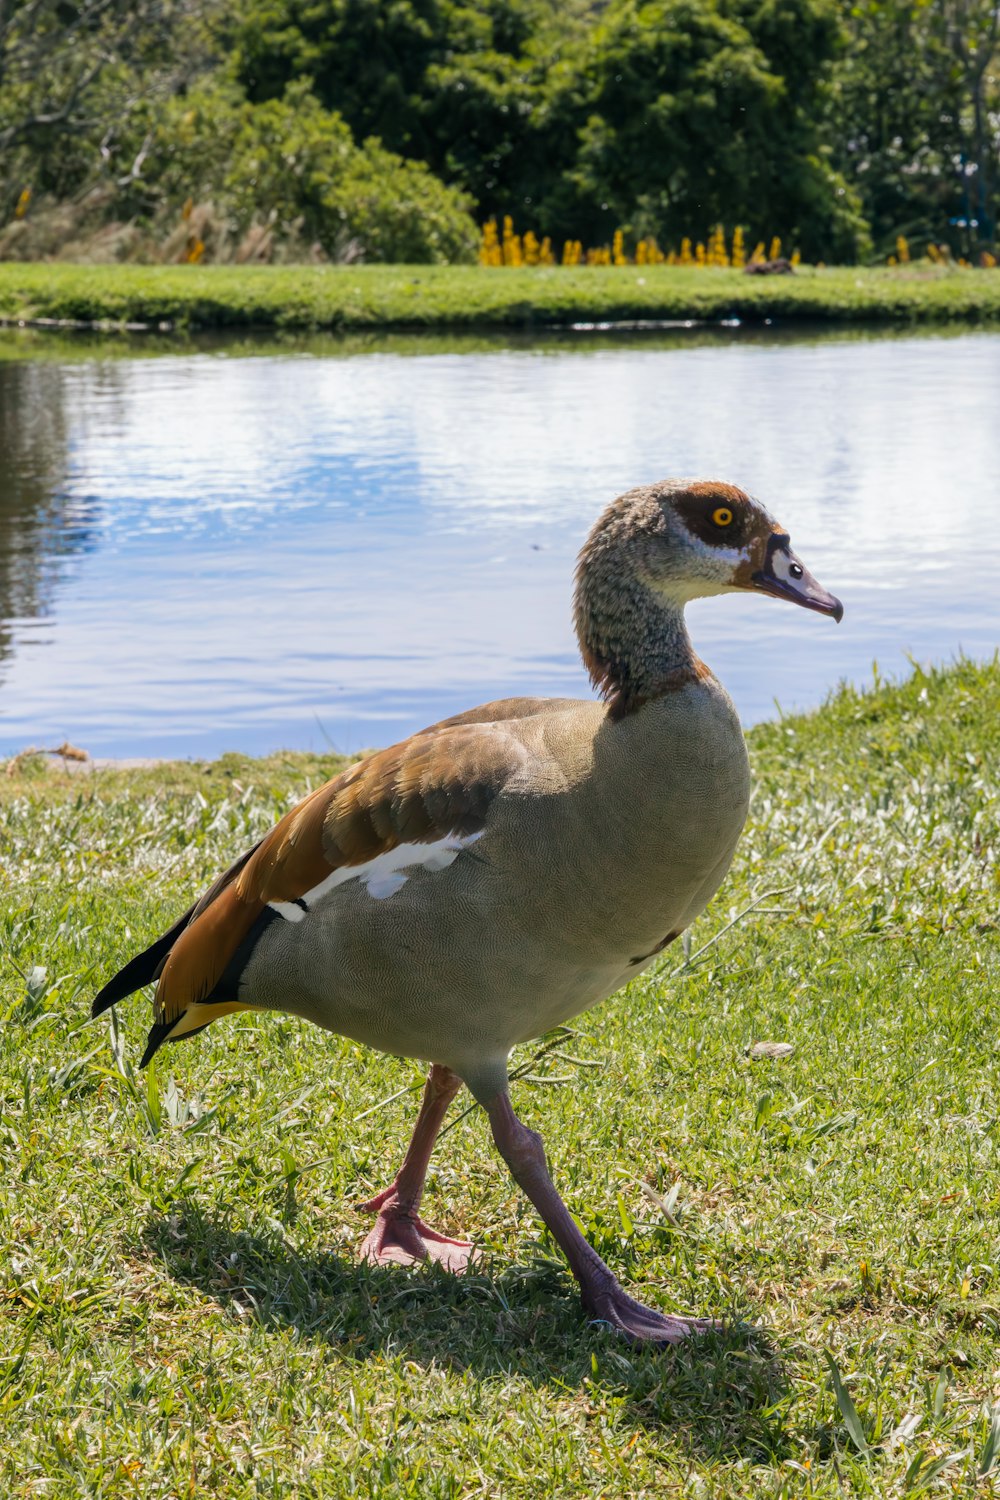 a duck walking in the grass near a lake